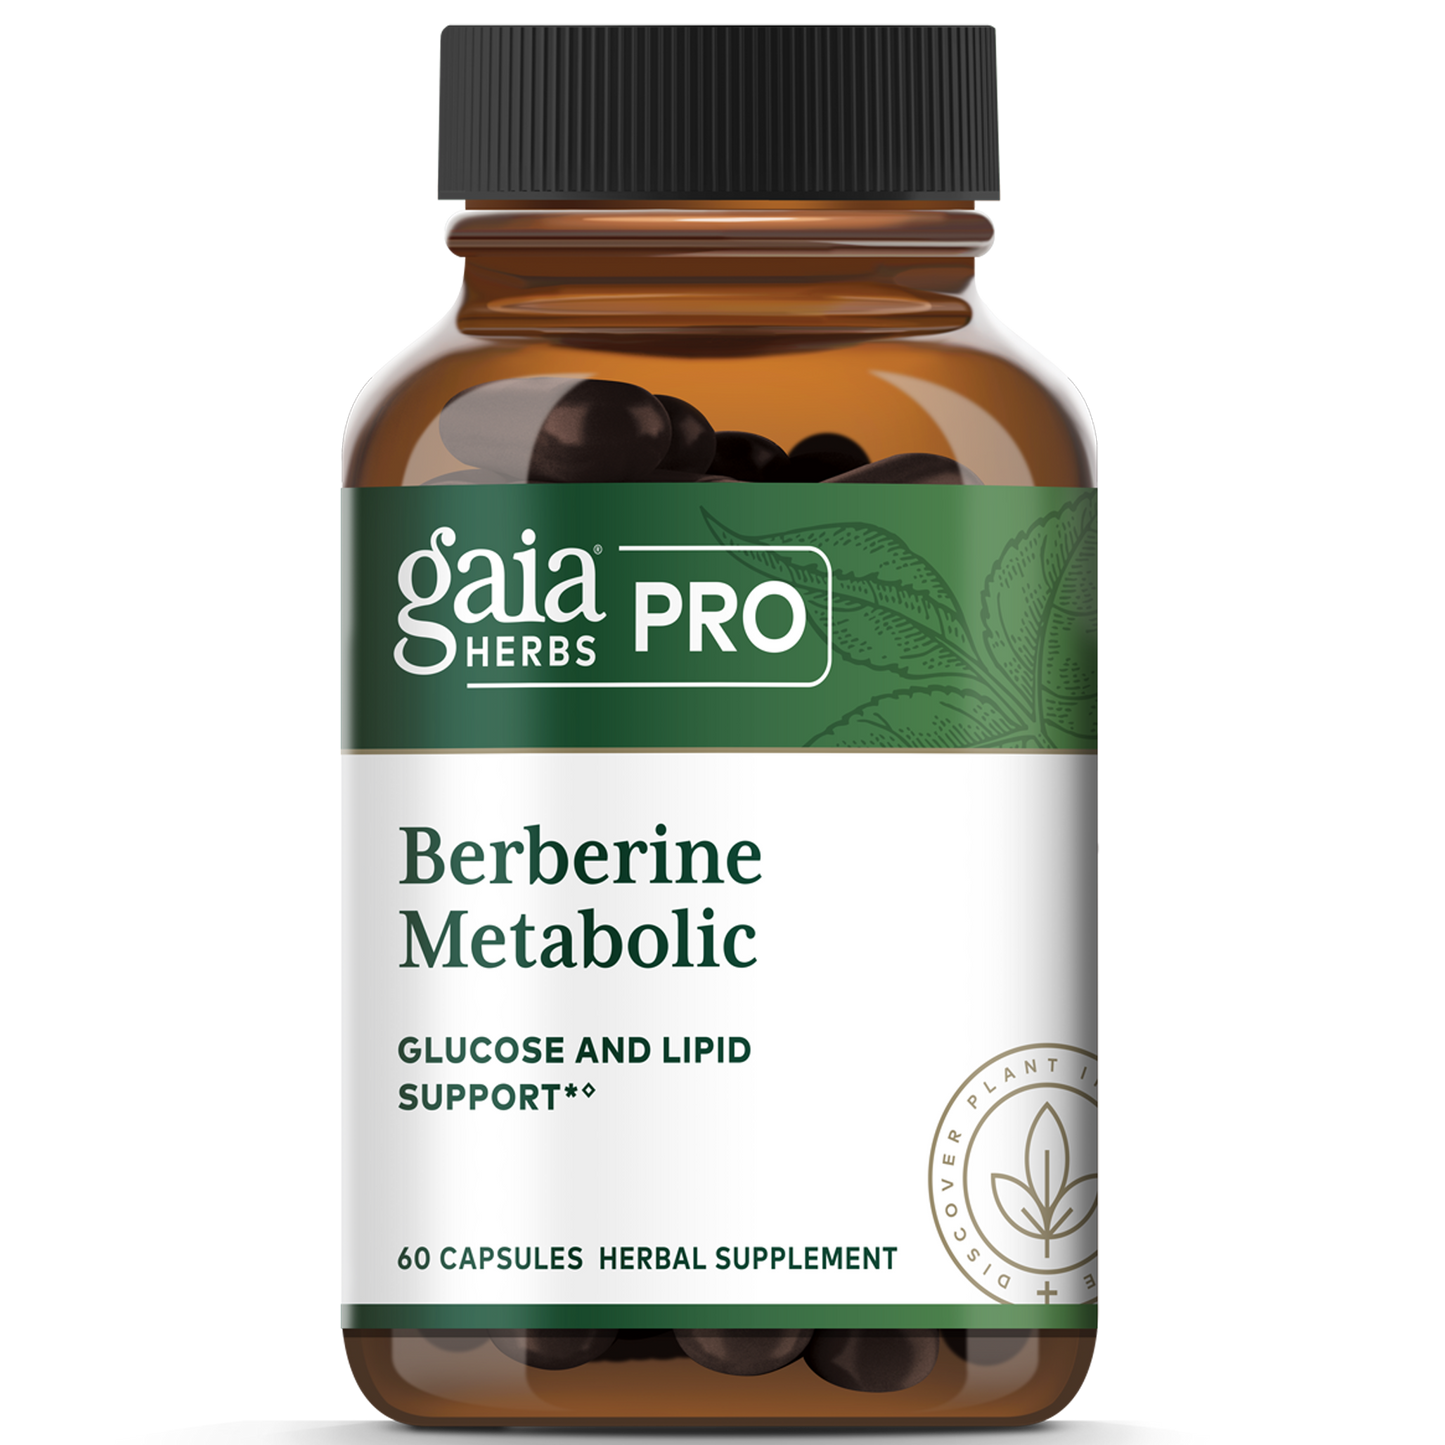 Berberine Metabolic